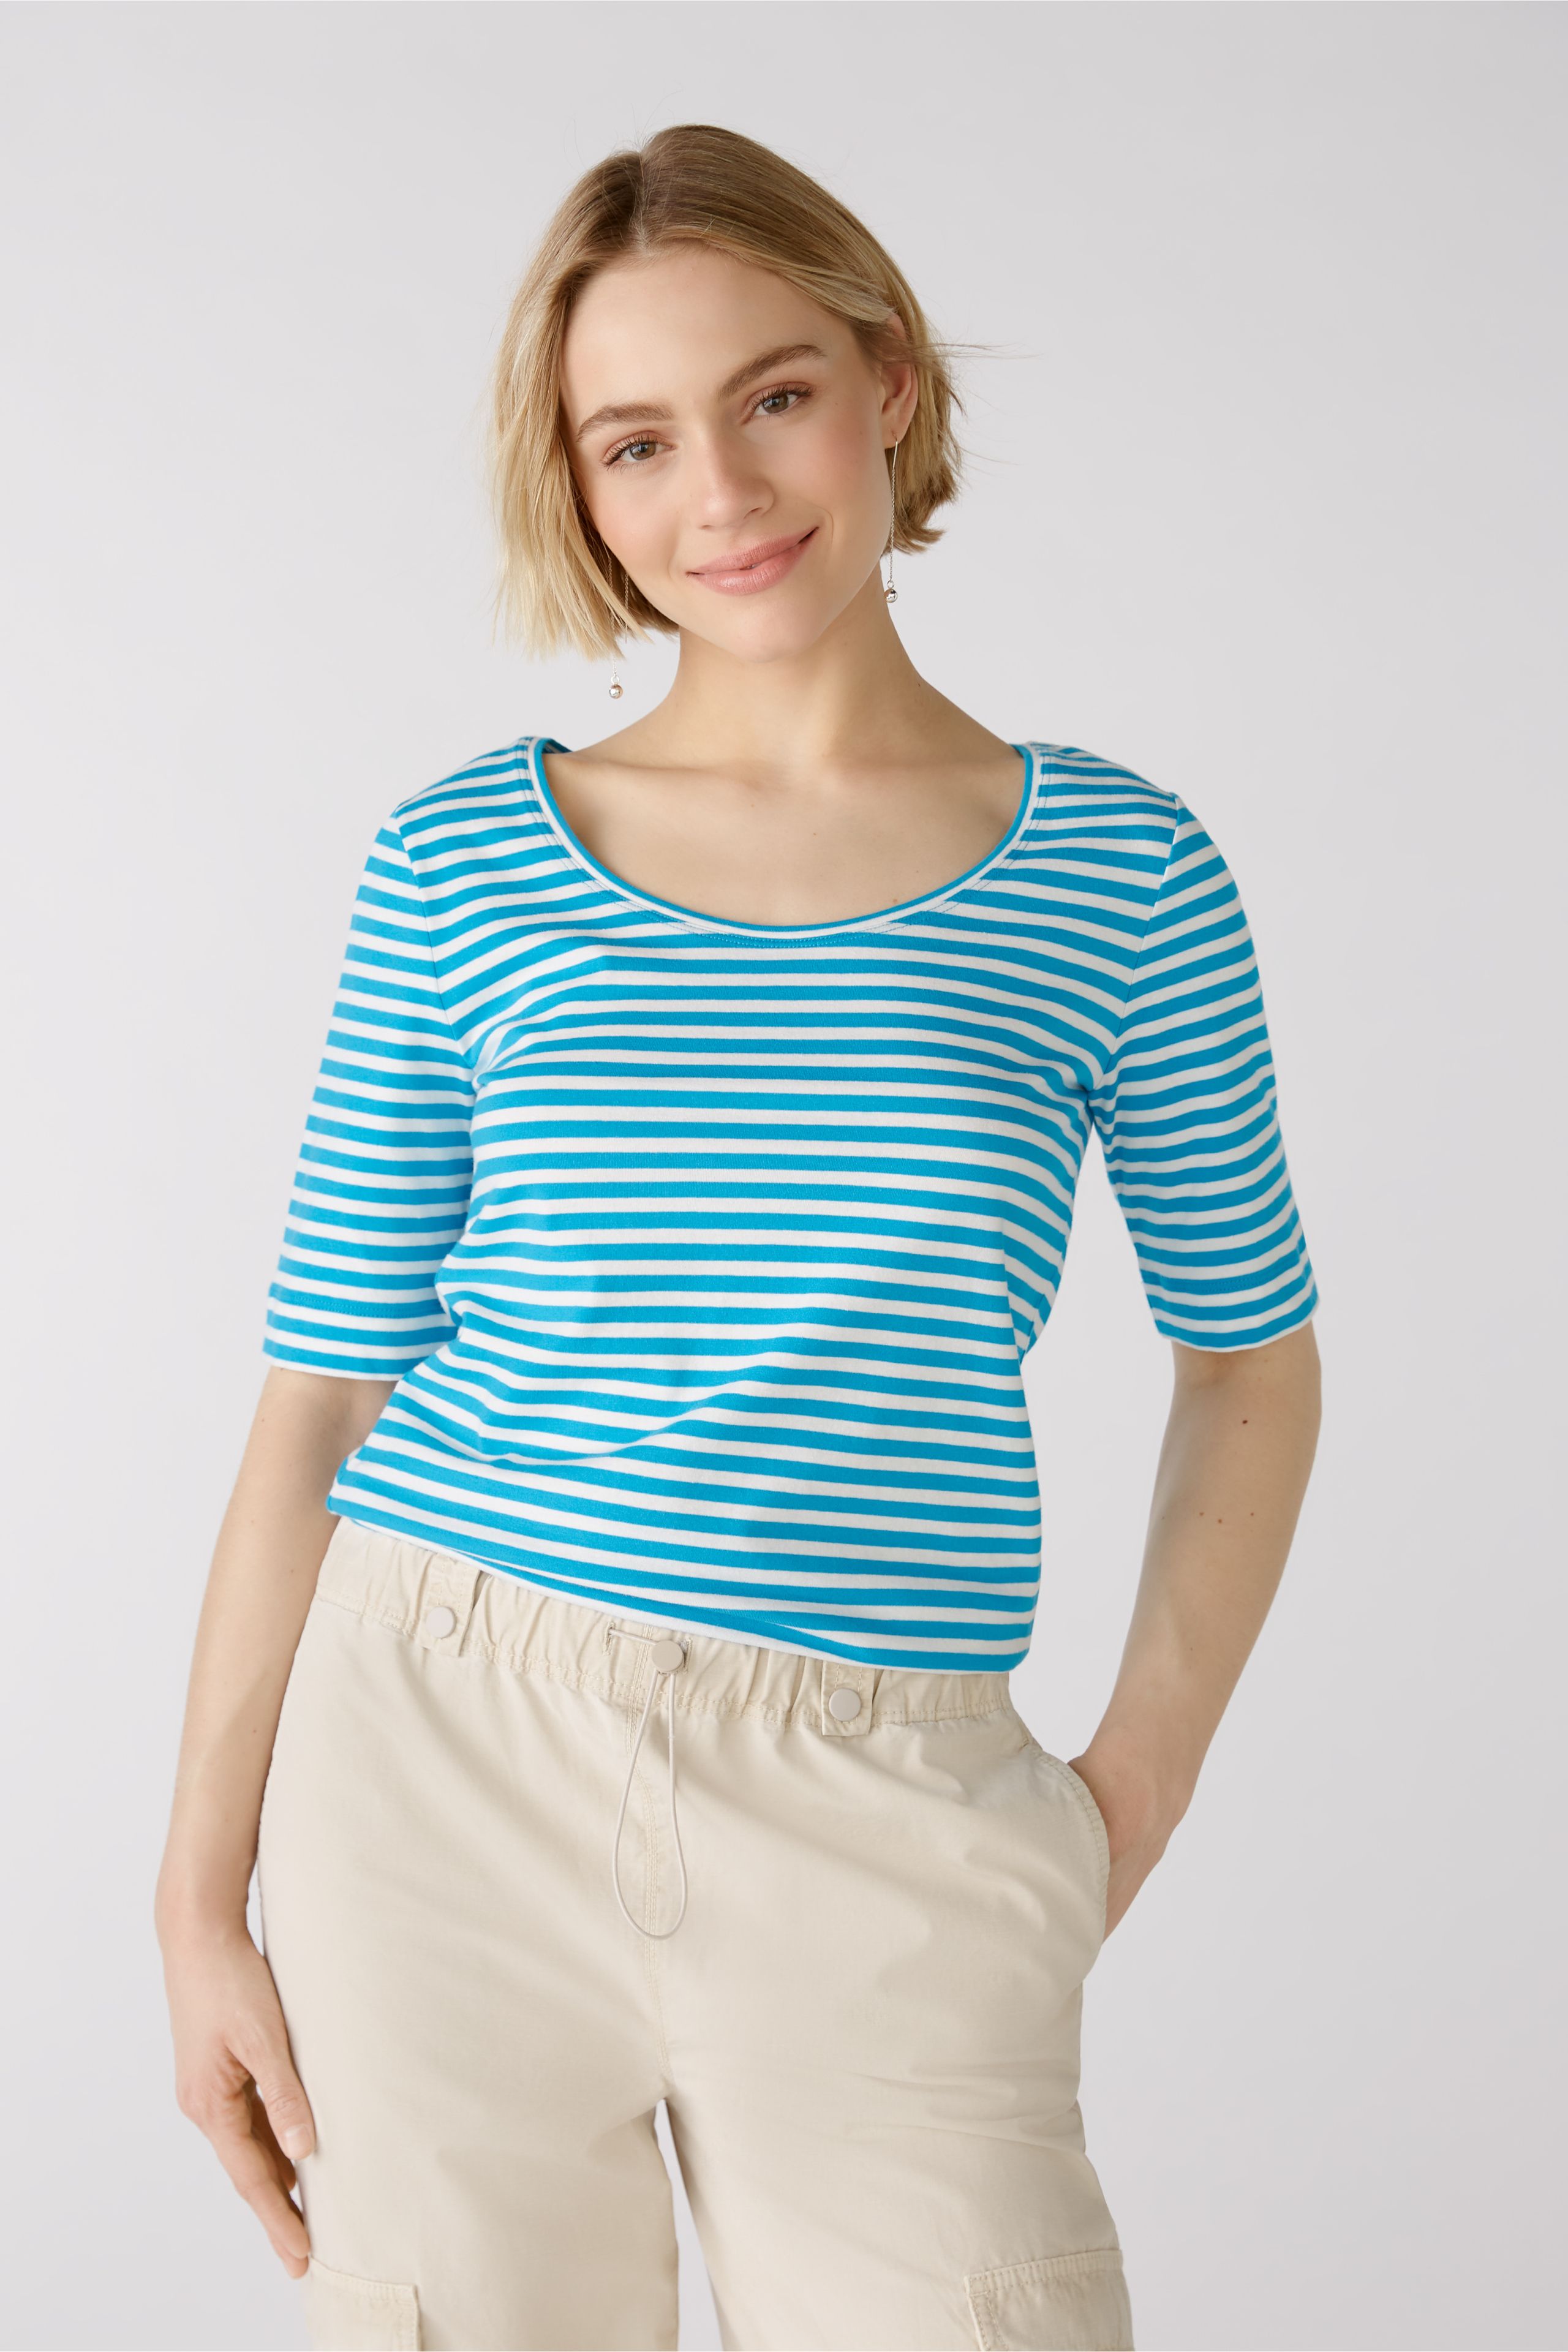 Oui T-Shirt 1/2 Arm  fine Stripe 38 light blue